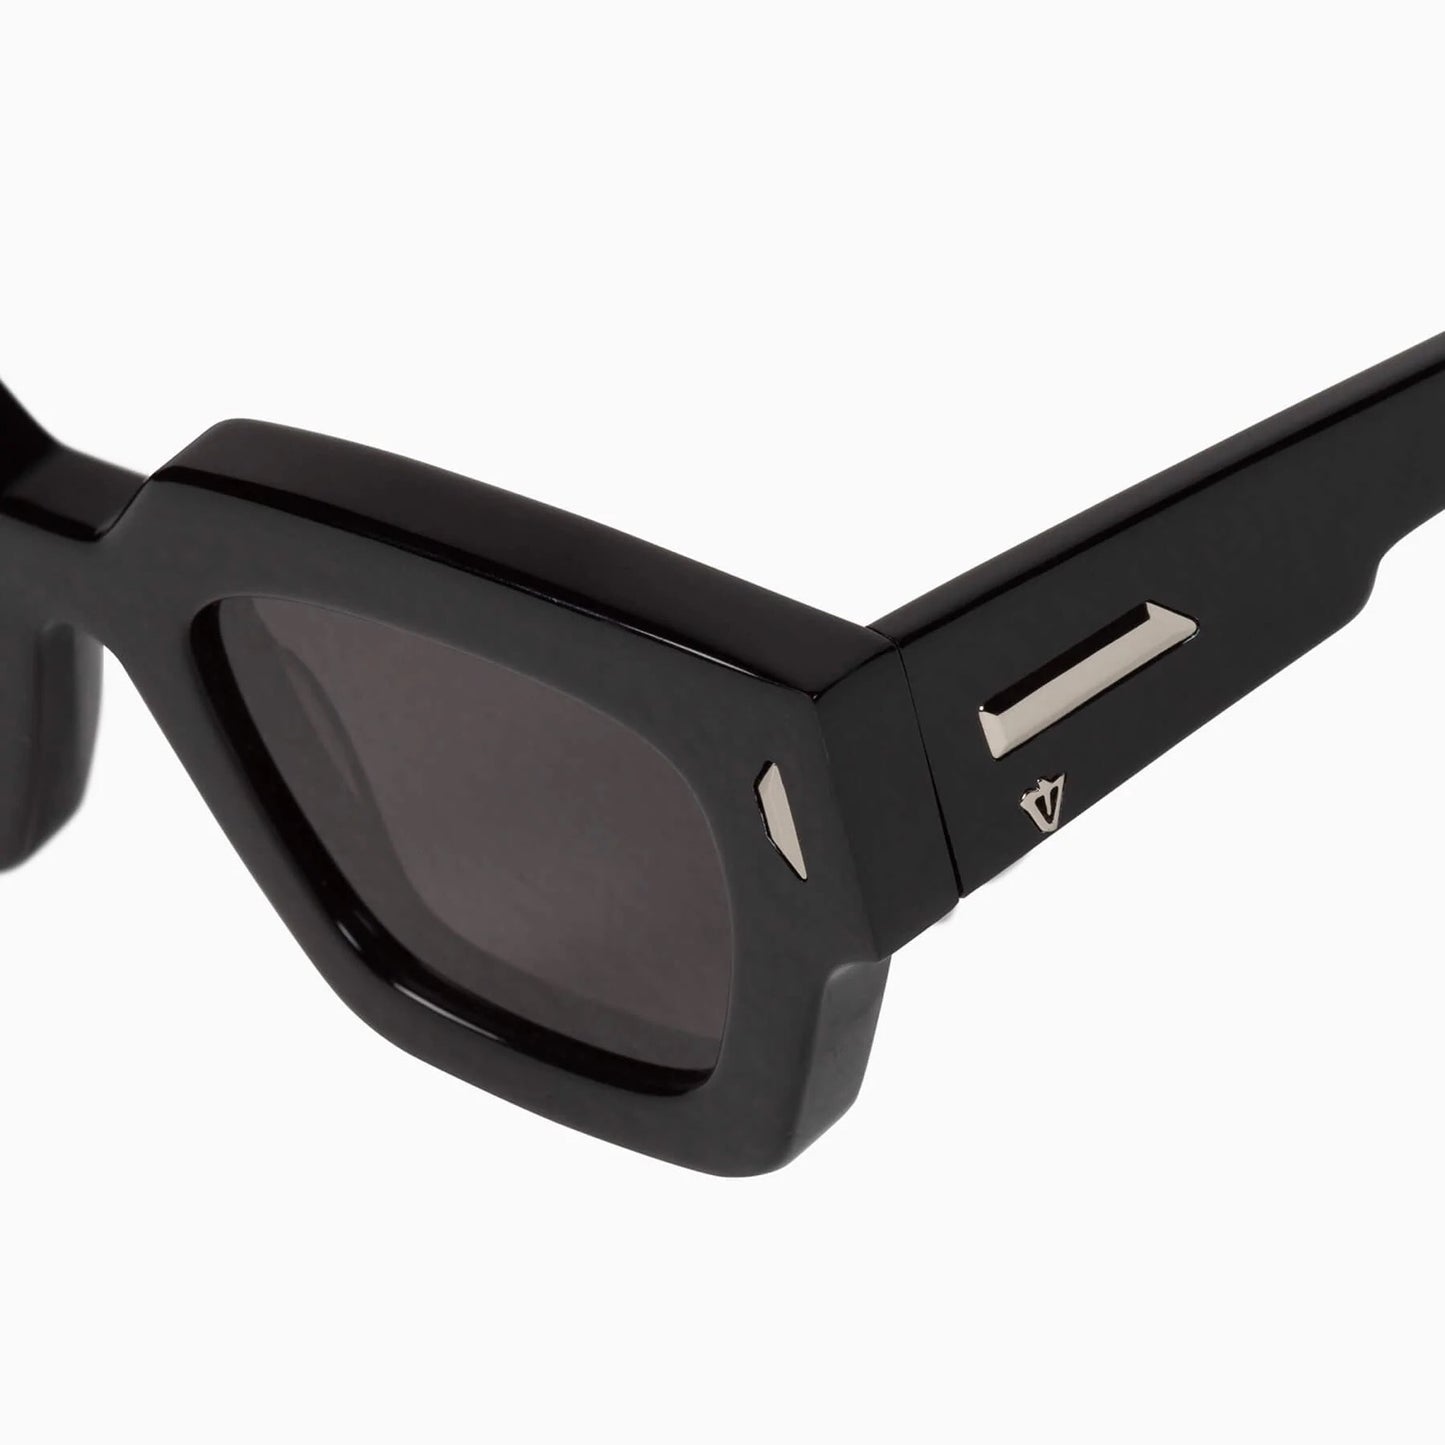 Valley - Ghost Sunglasses - Gloss Black / Silver Metal Trim / Black Lens